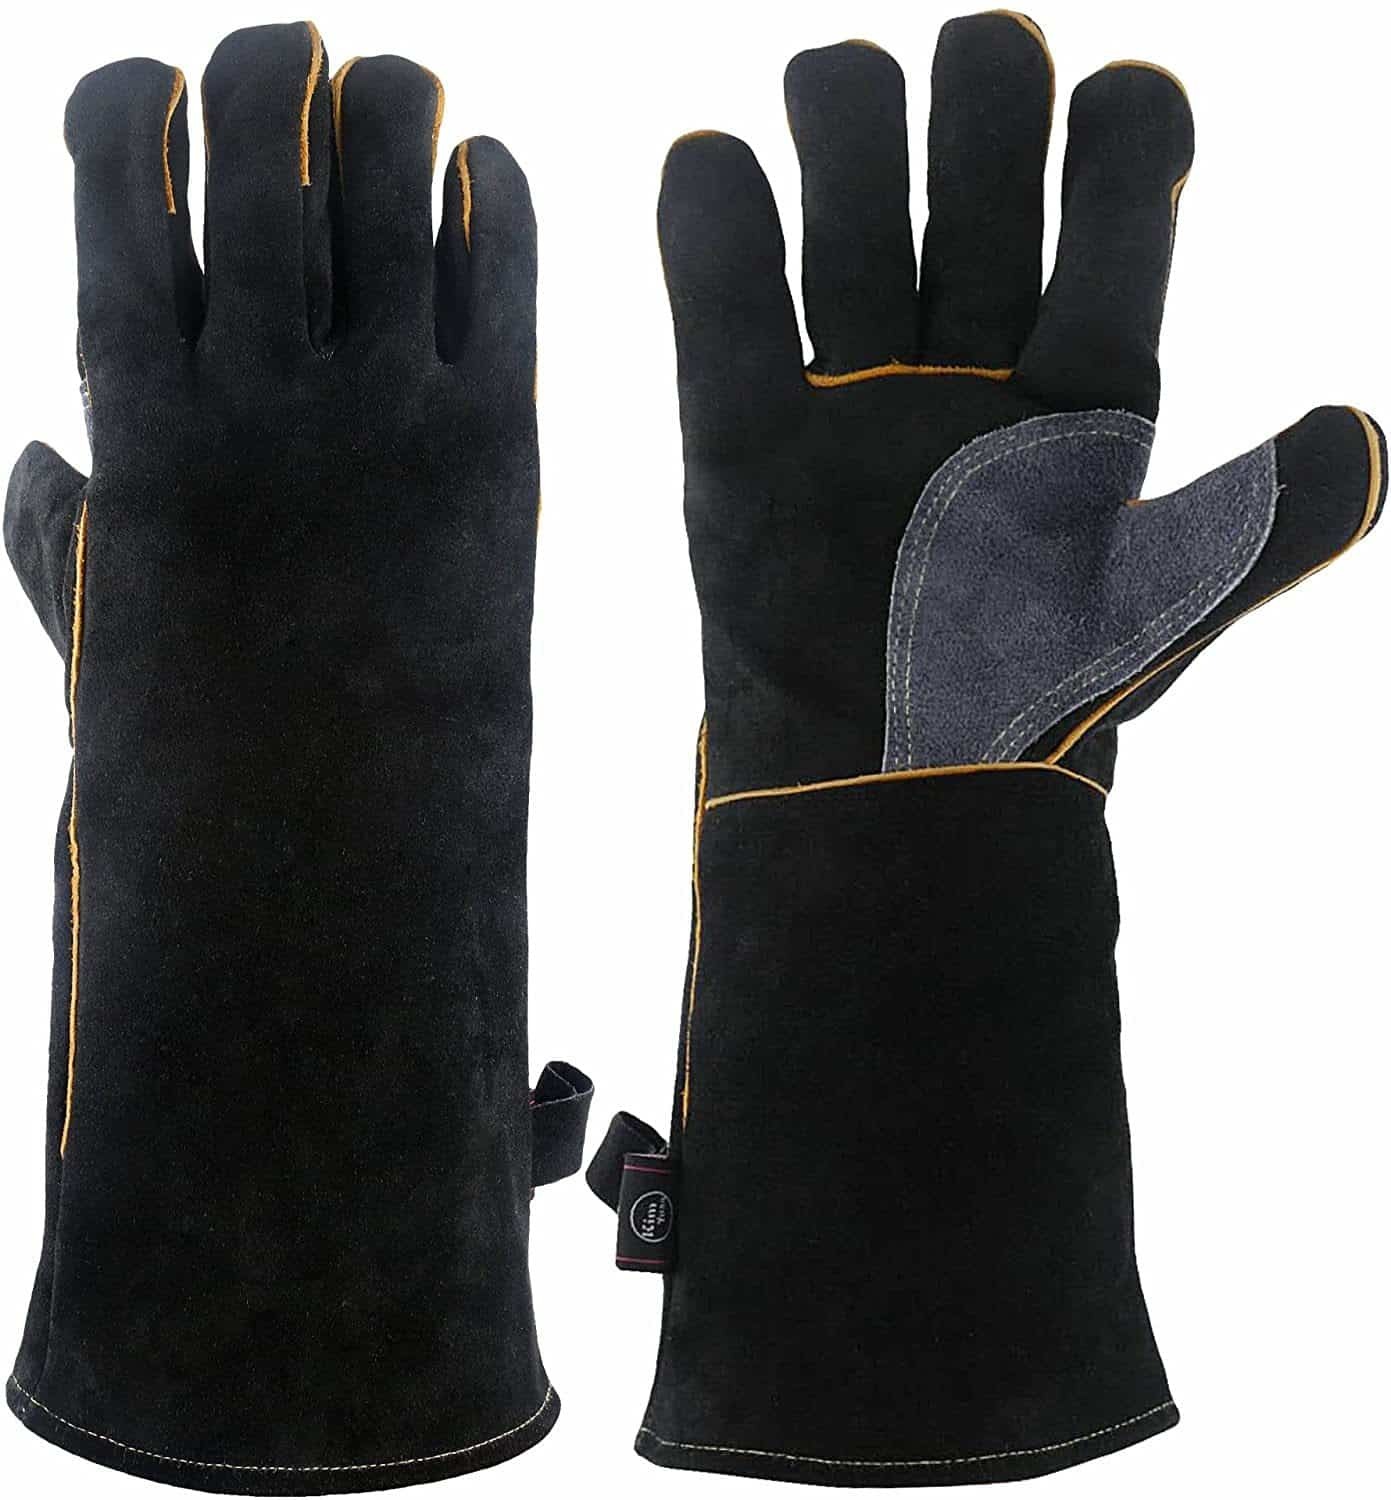 KIM YUAN Extreme Heat Resistant Welding Gloves